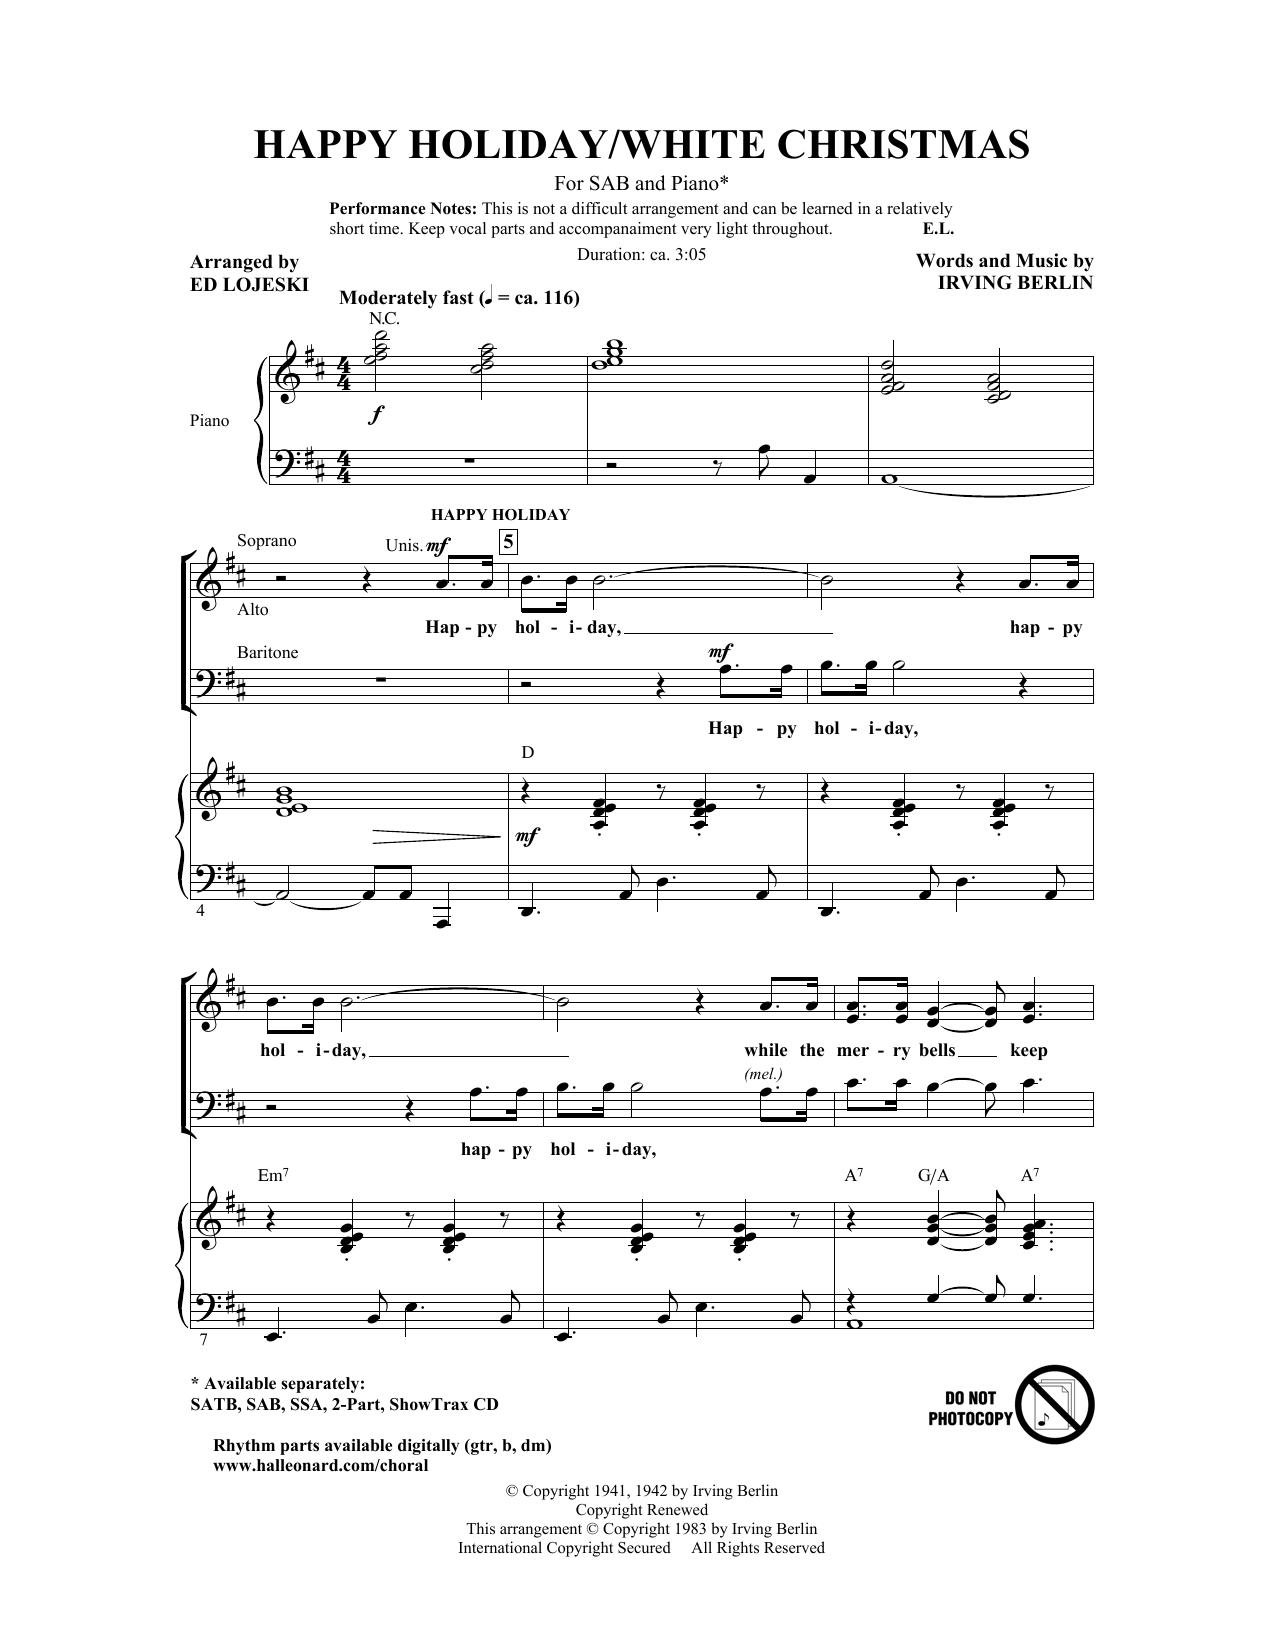 Irving Berlin Happy Holiday (arr. Ed Lojeski) Sheet Music Notes & Chords for SAB - Download or Print PDF